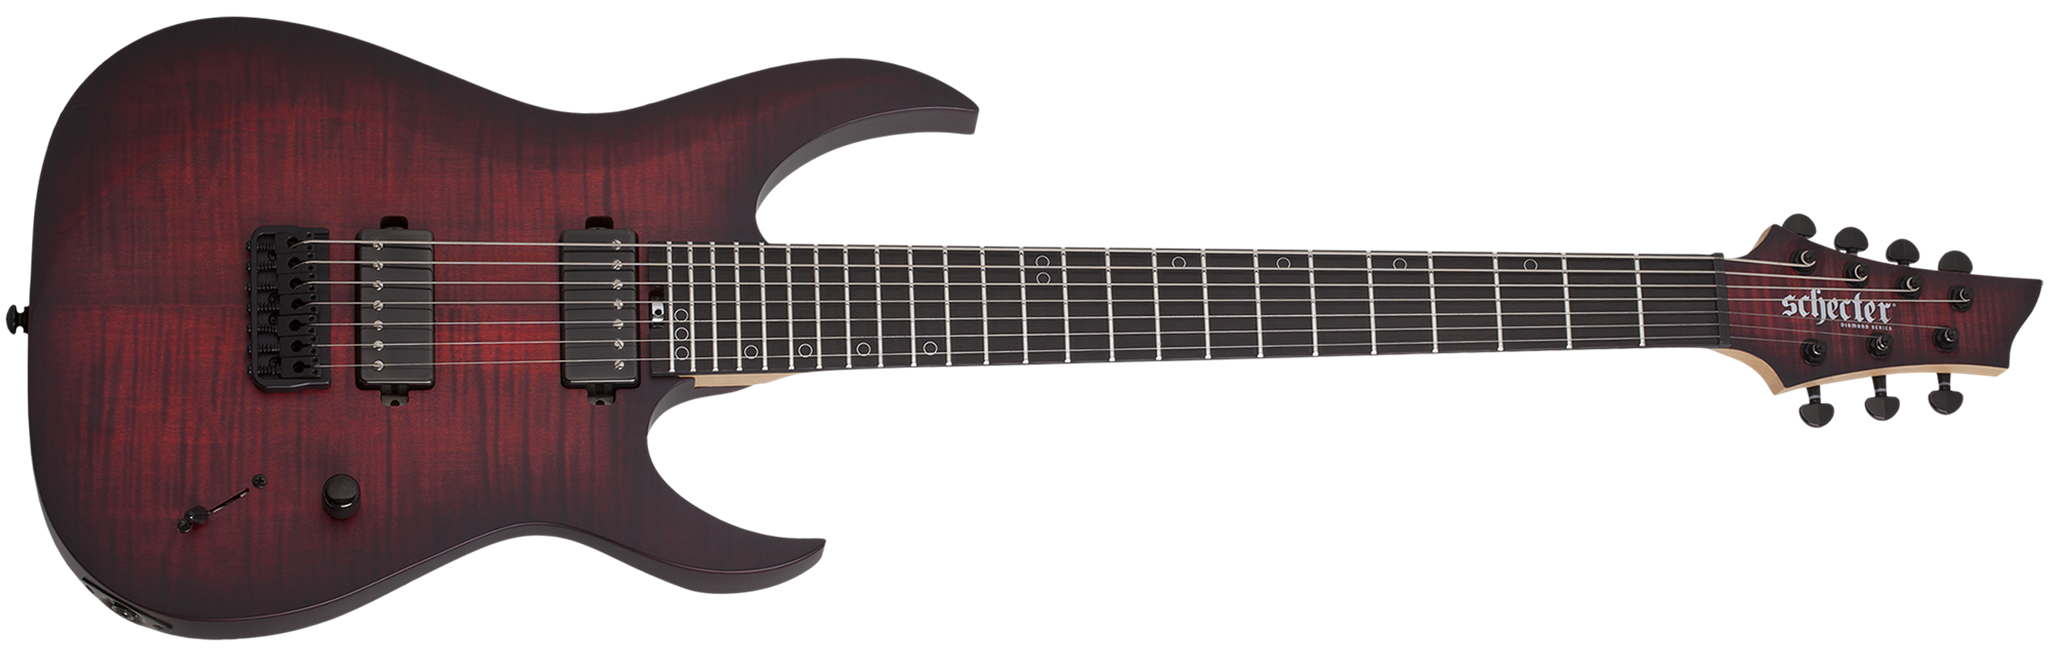 Schecter DIAMOND SERIES Sunset-7 Extreme Scarlet Burst  7-String Electric Guitar